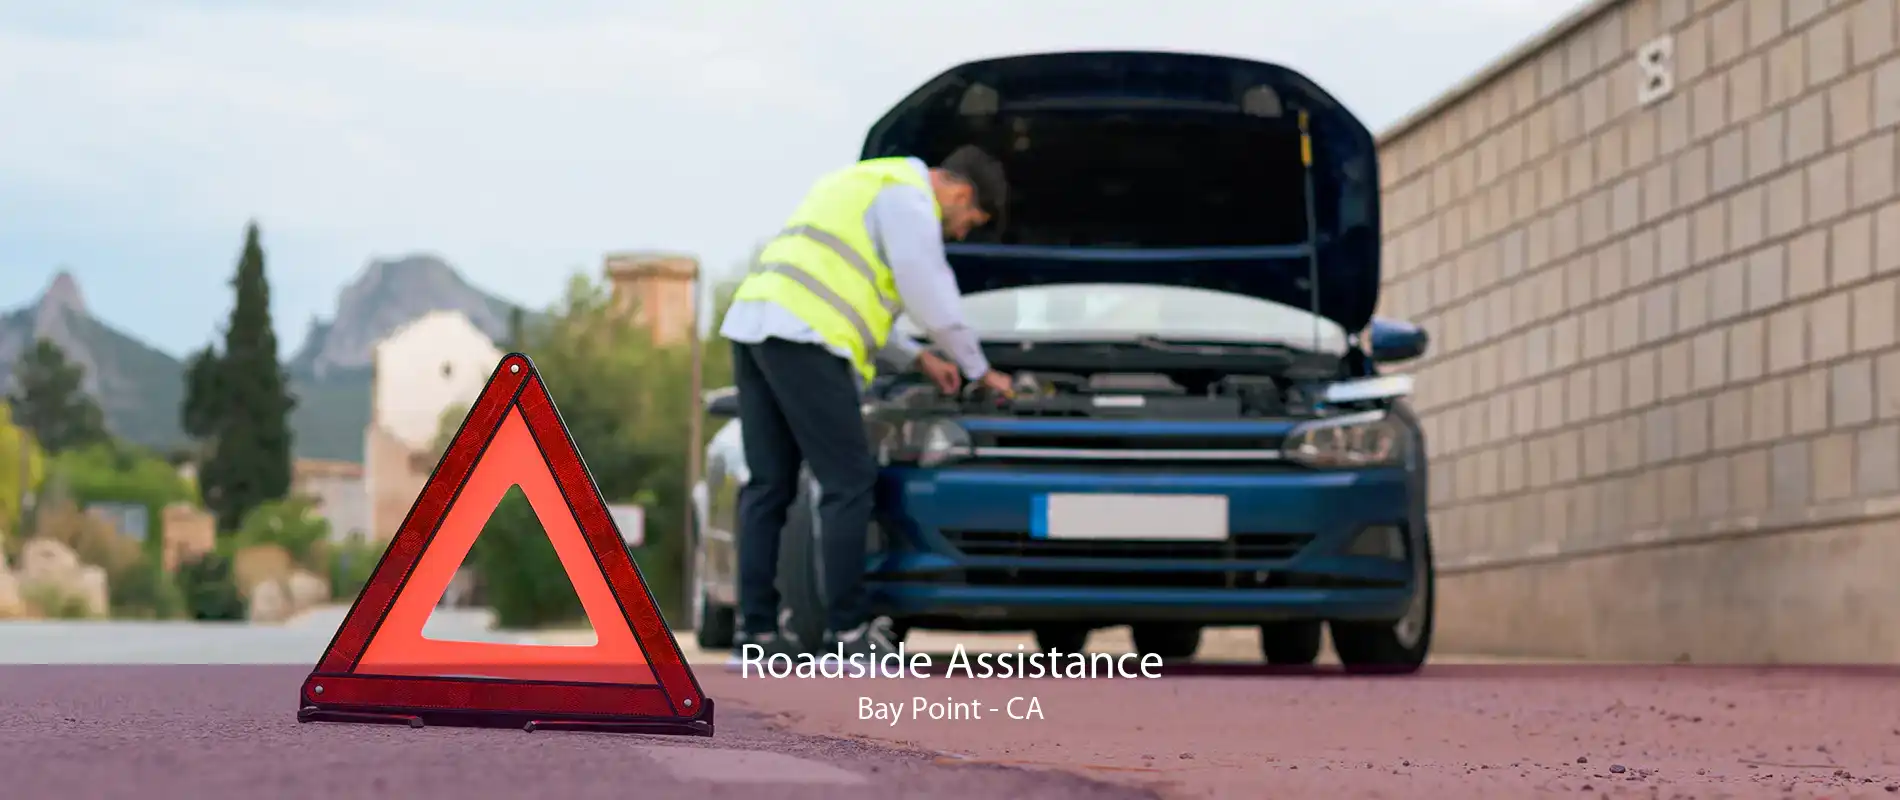 Roadside Assistance Bay Point - CA